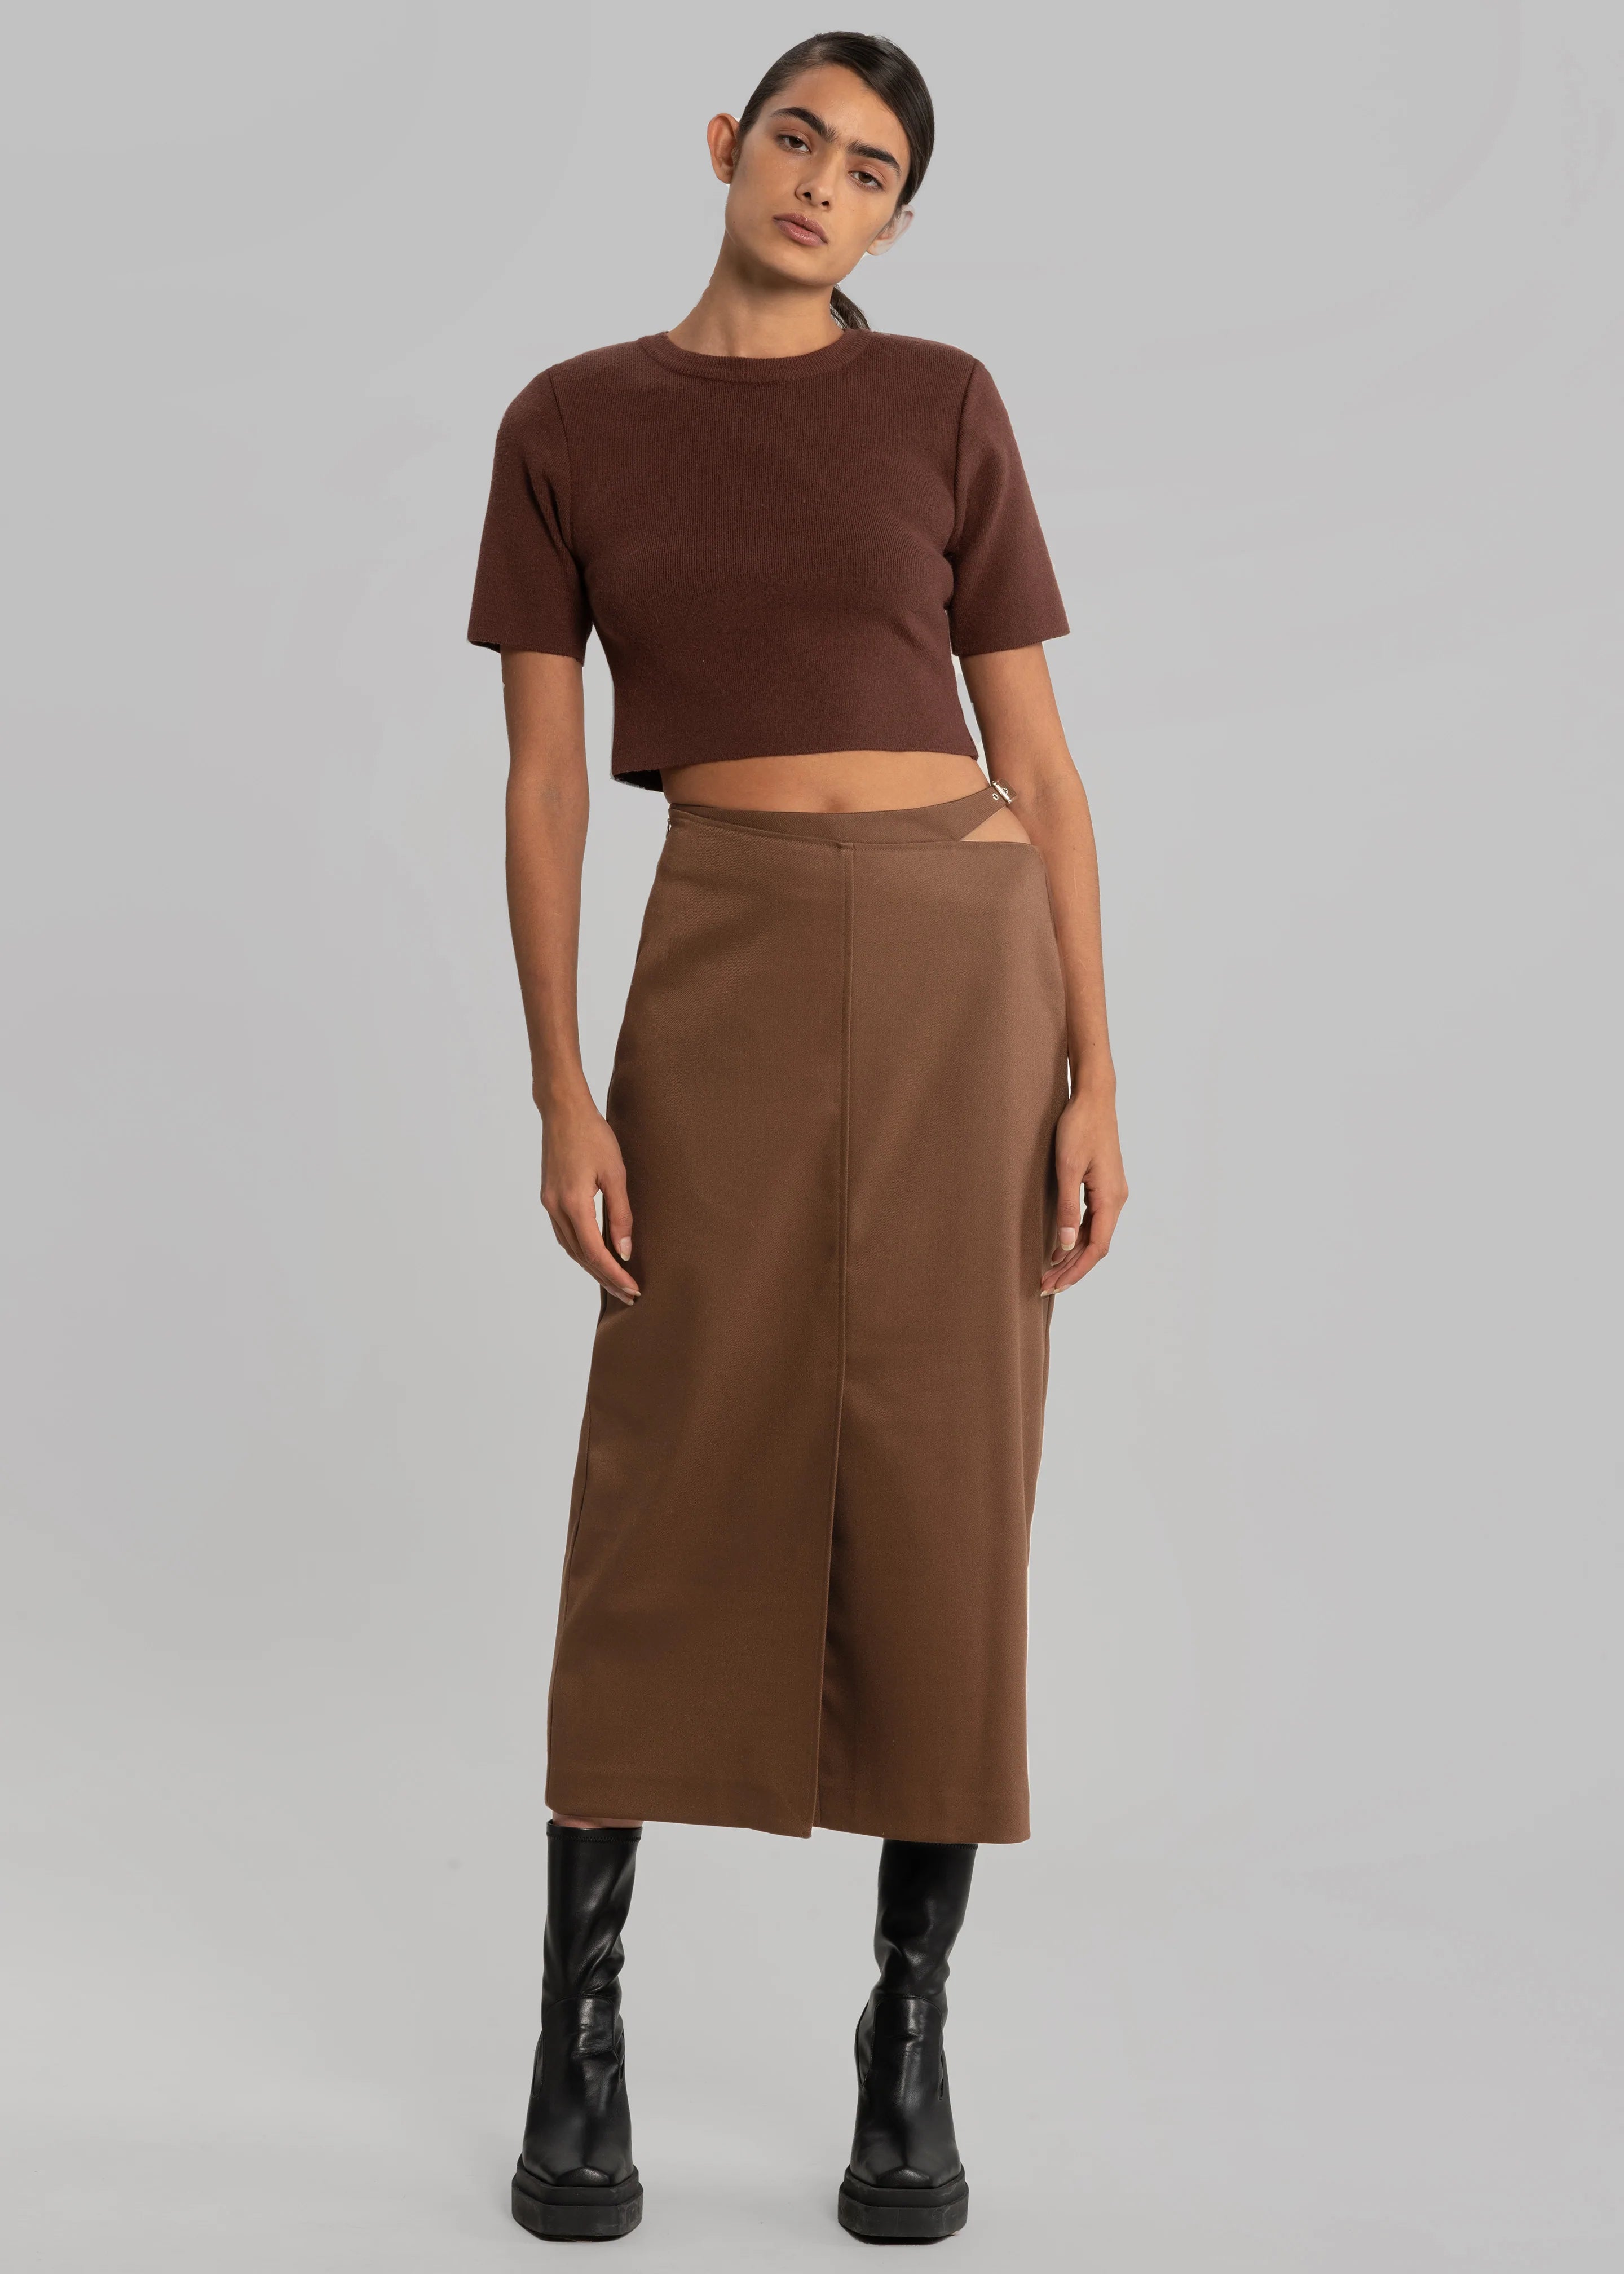 Stacia Cut Out Midi Skirt - Brown - 11